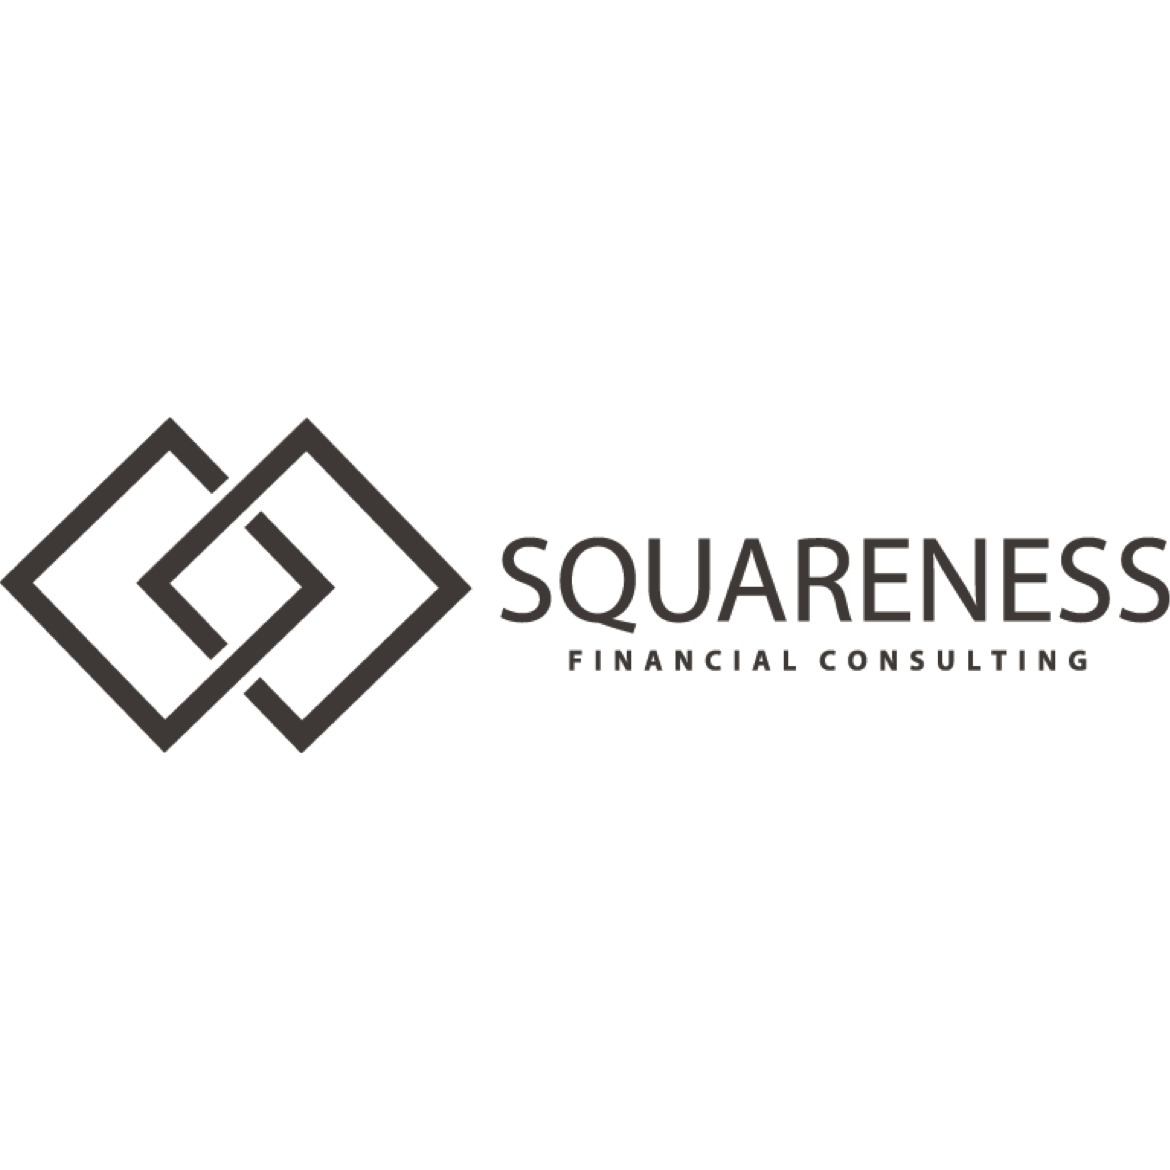 Squareness